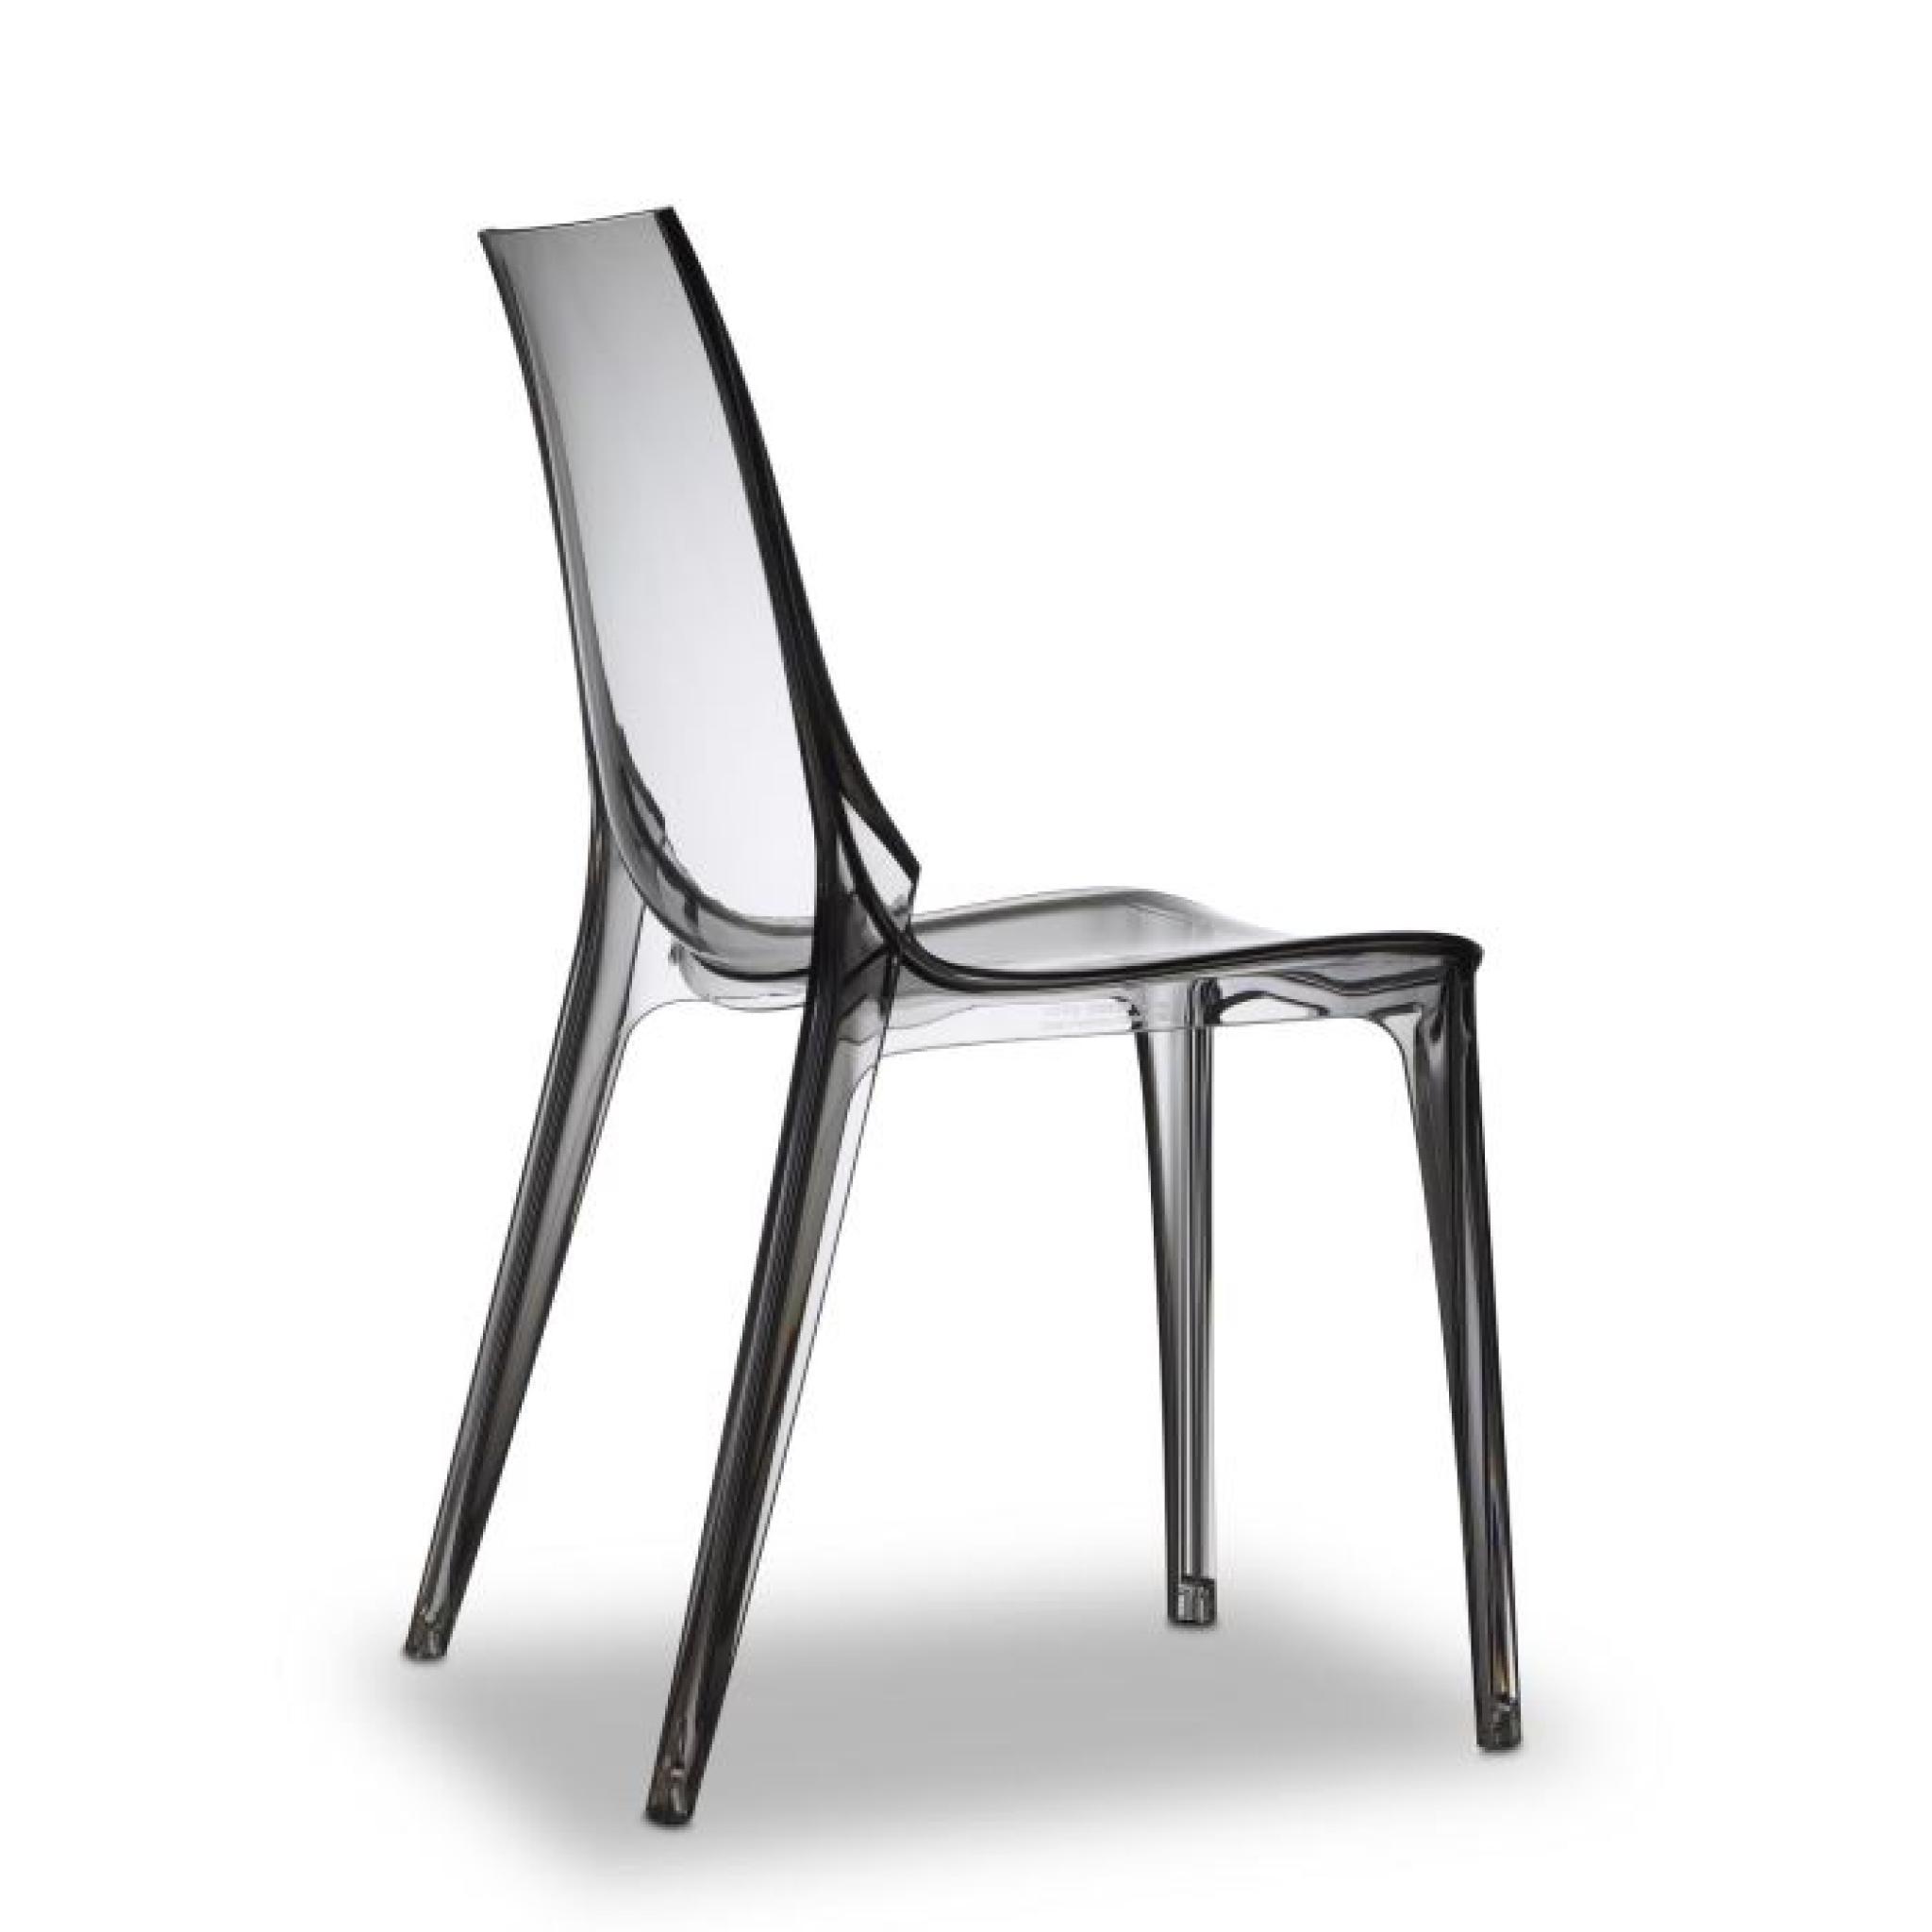 Chaise transparente grise design - VANITY trans…